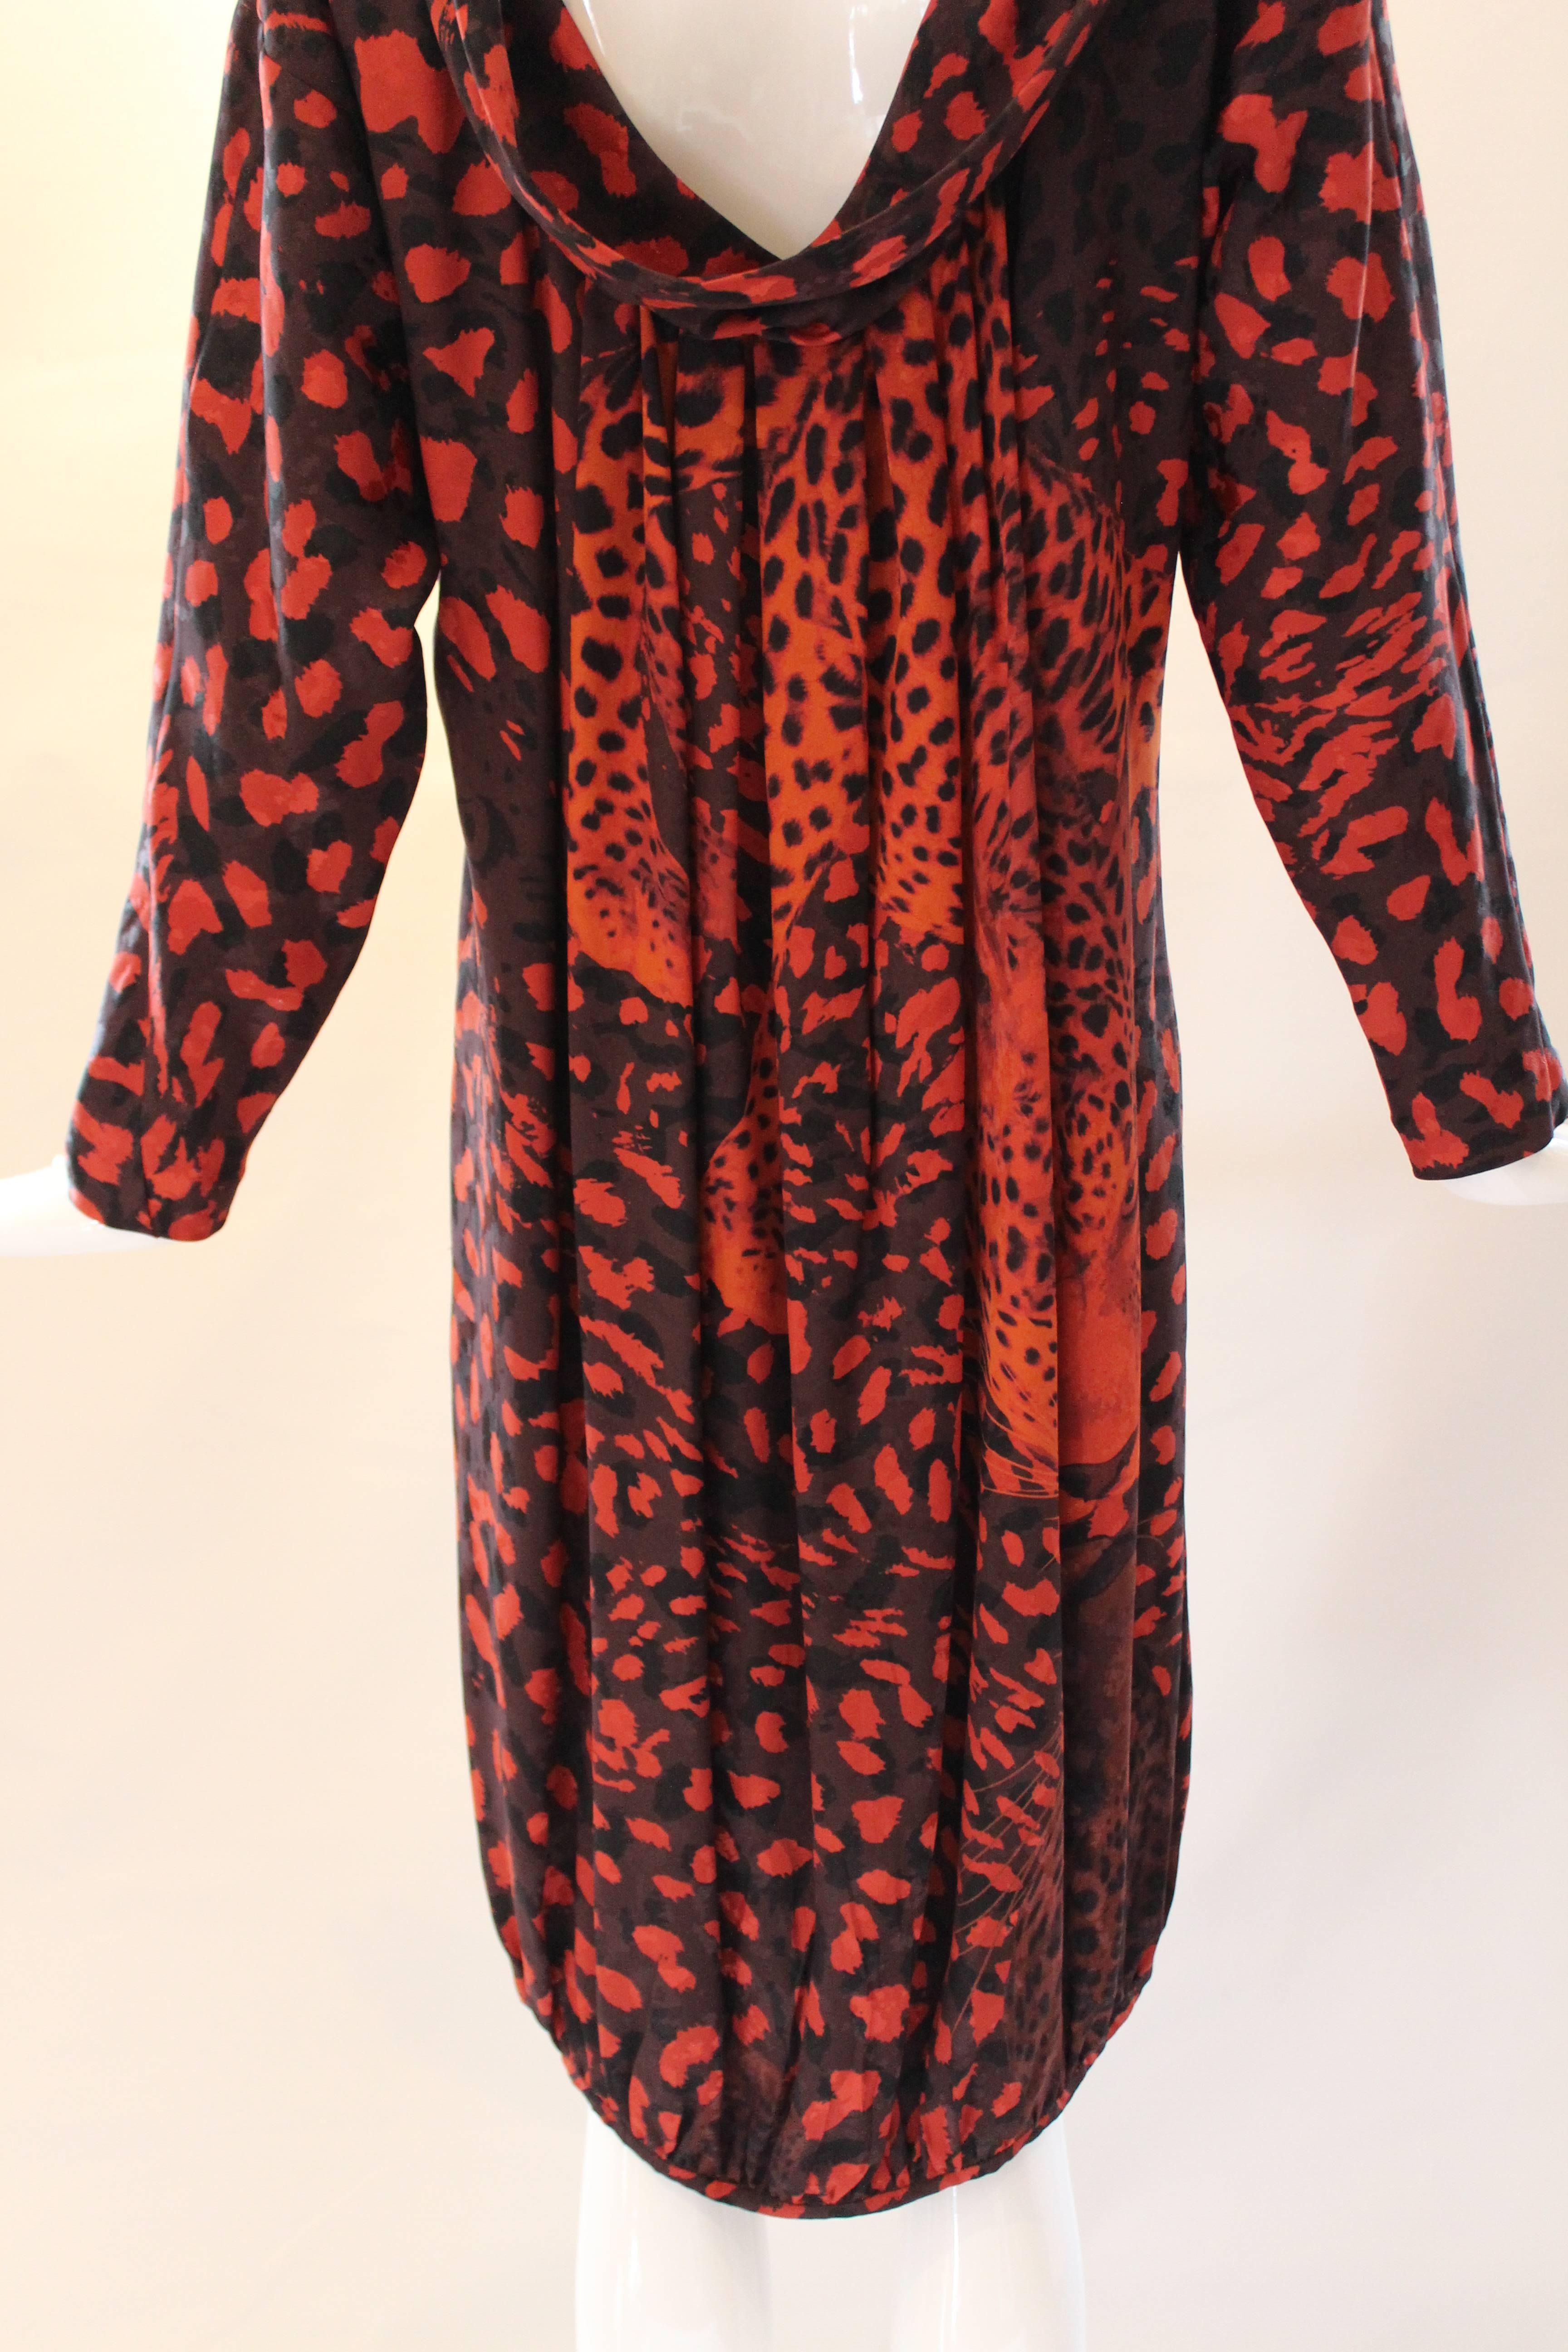 Hermes Leopard Print Dress 2